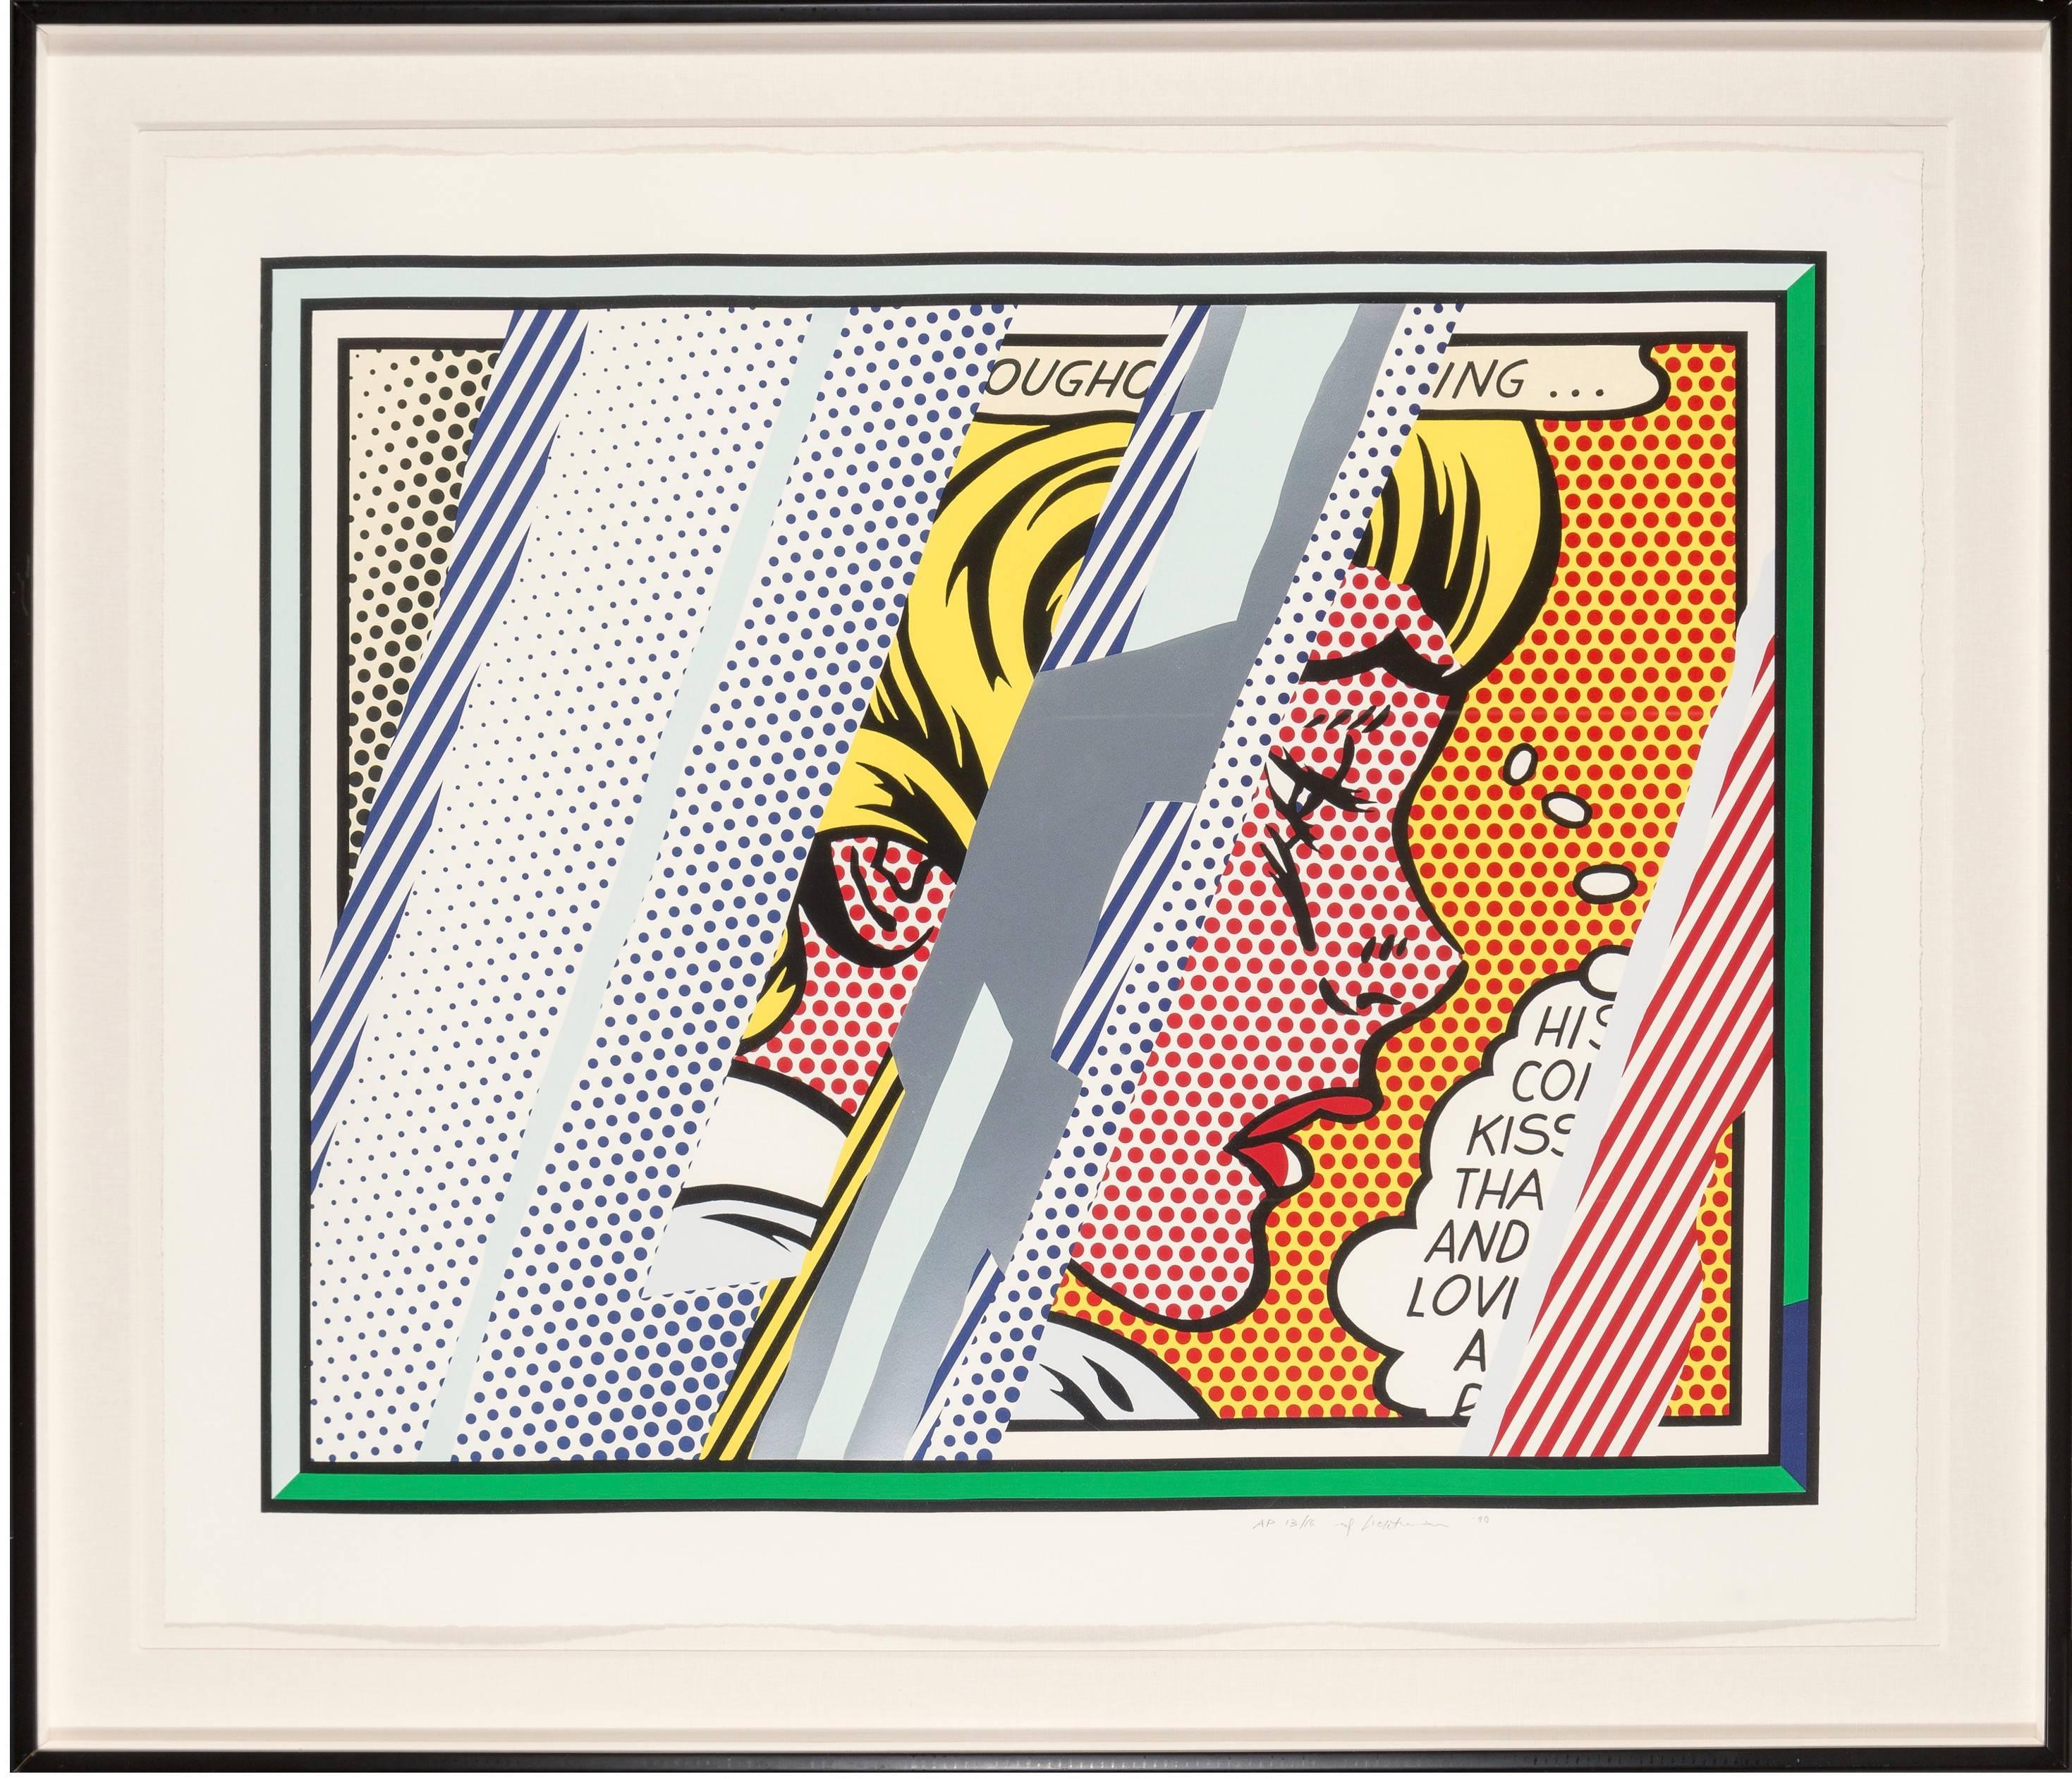 Reflections on Girl - Print by Roy Lichtenstein